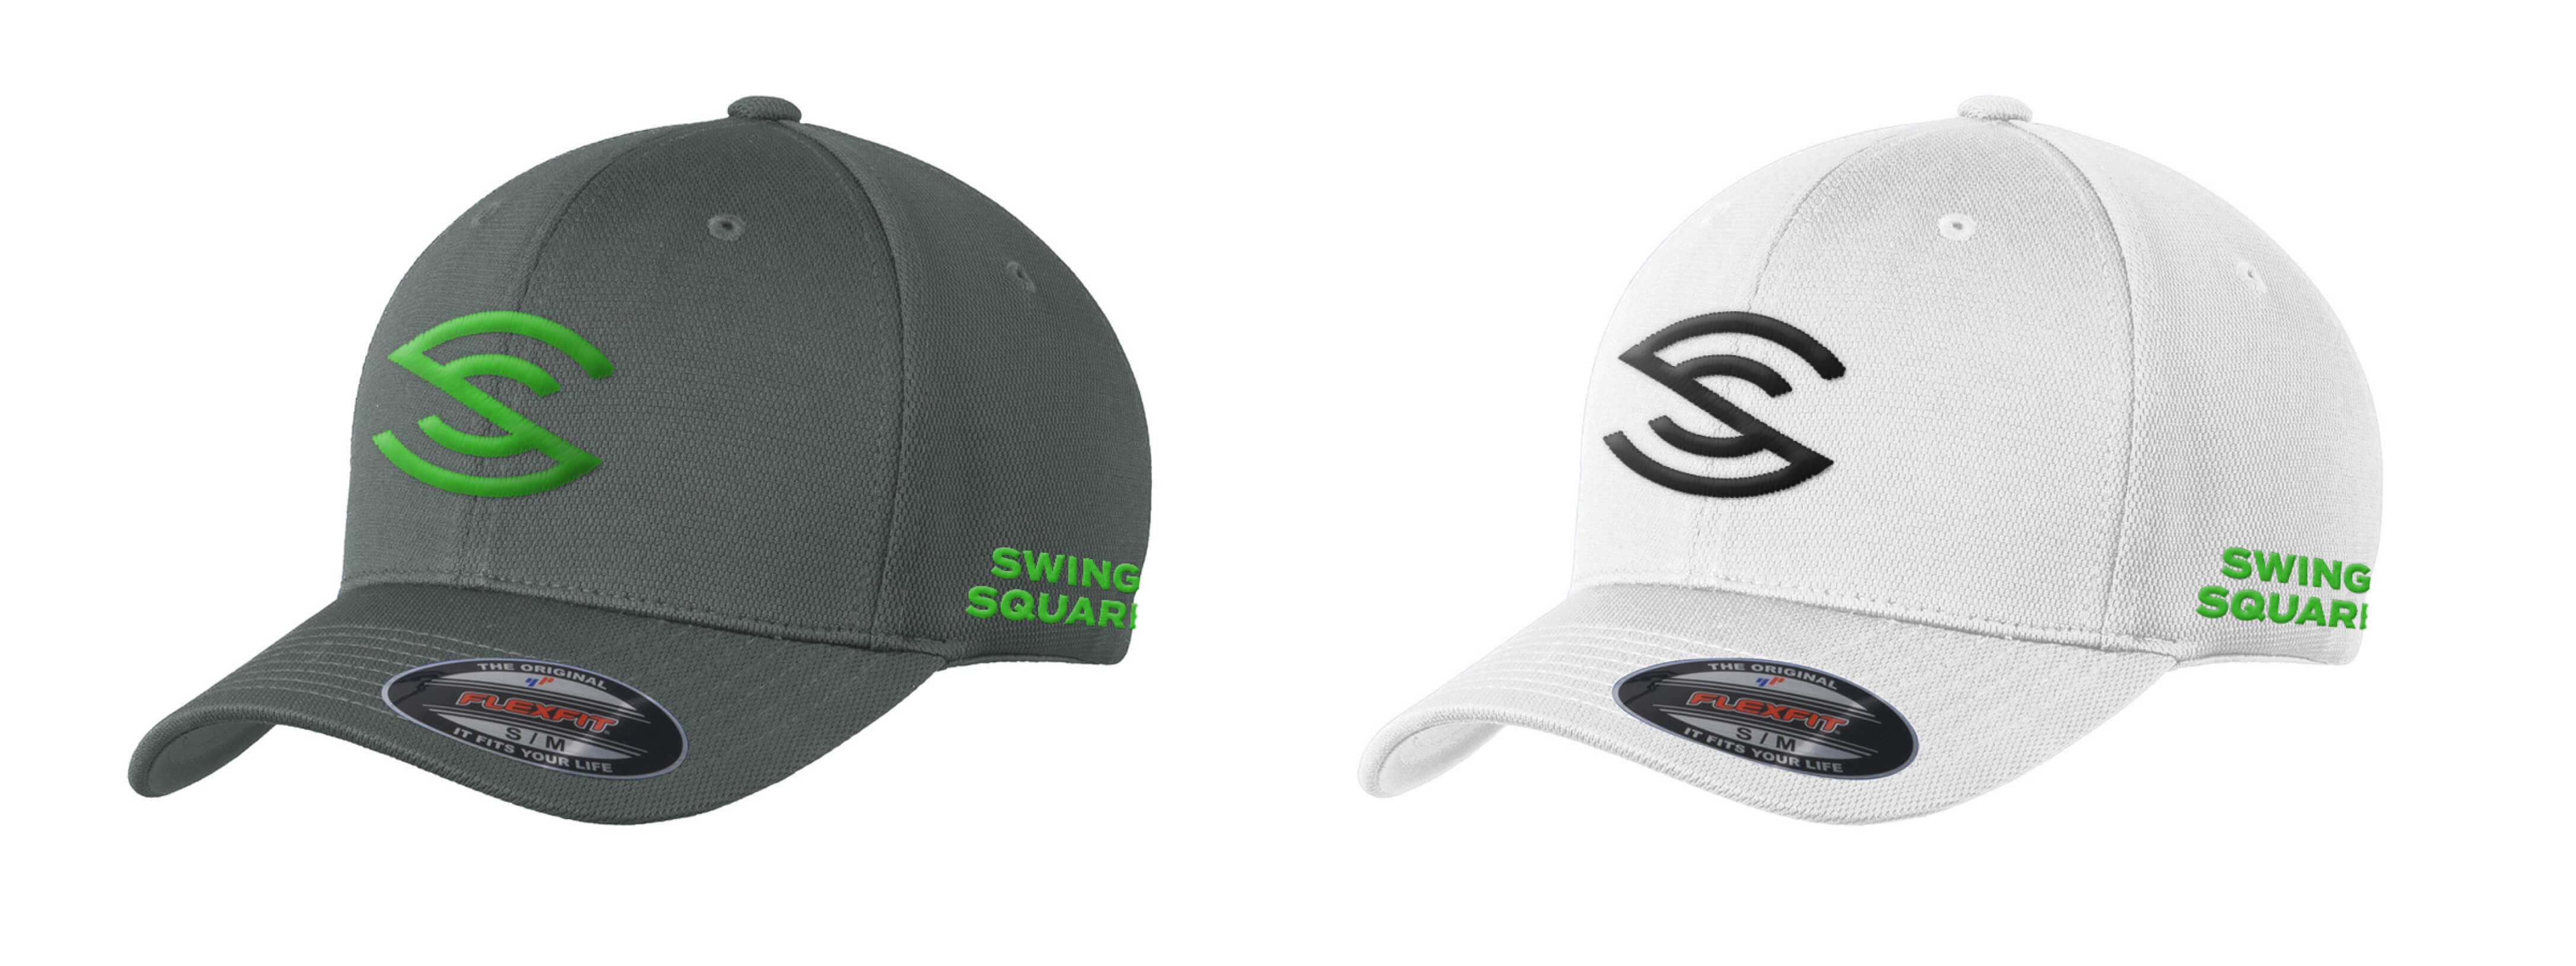 Swing Square - Golf Aid - Branding